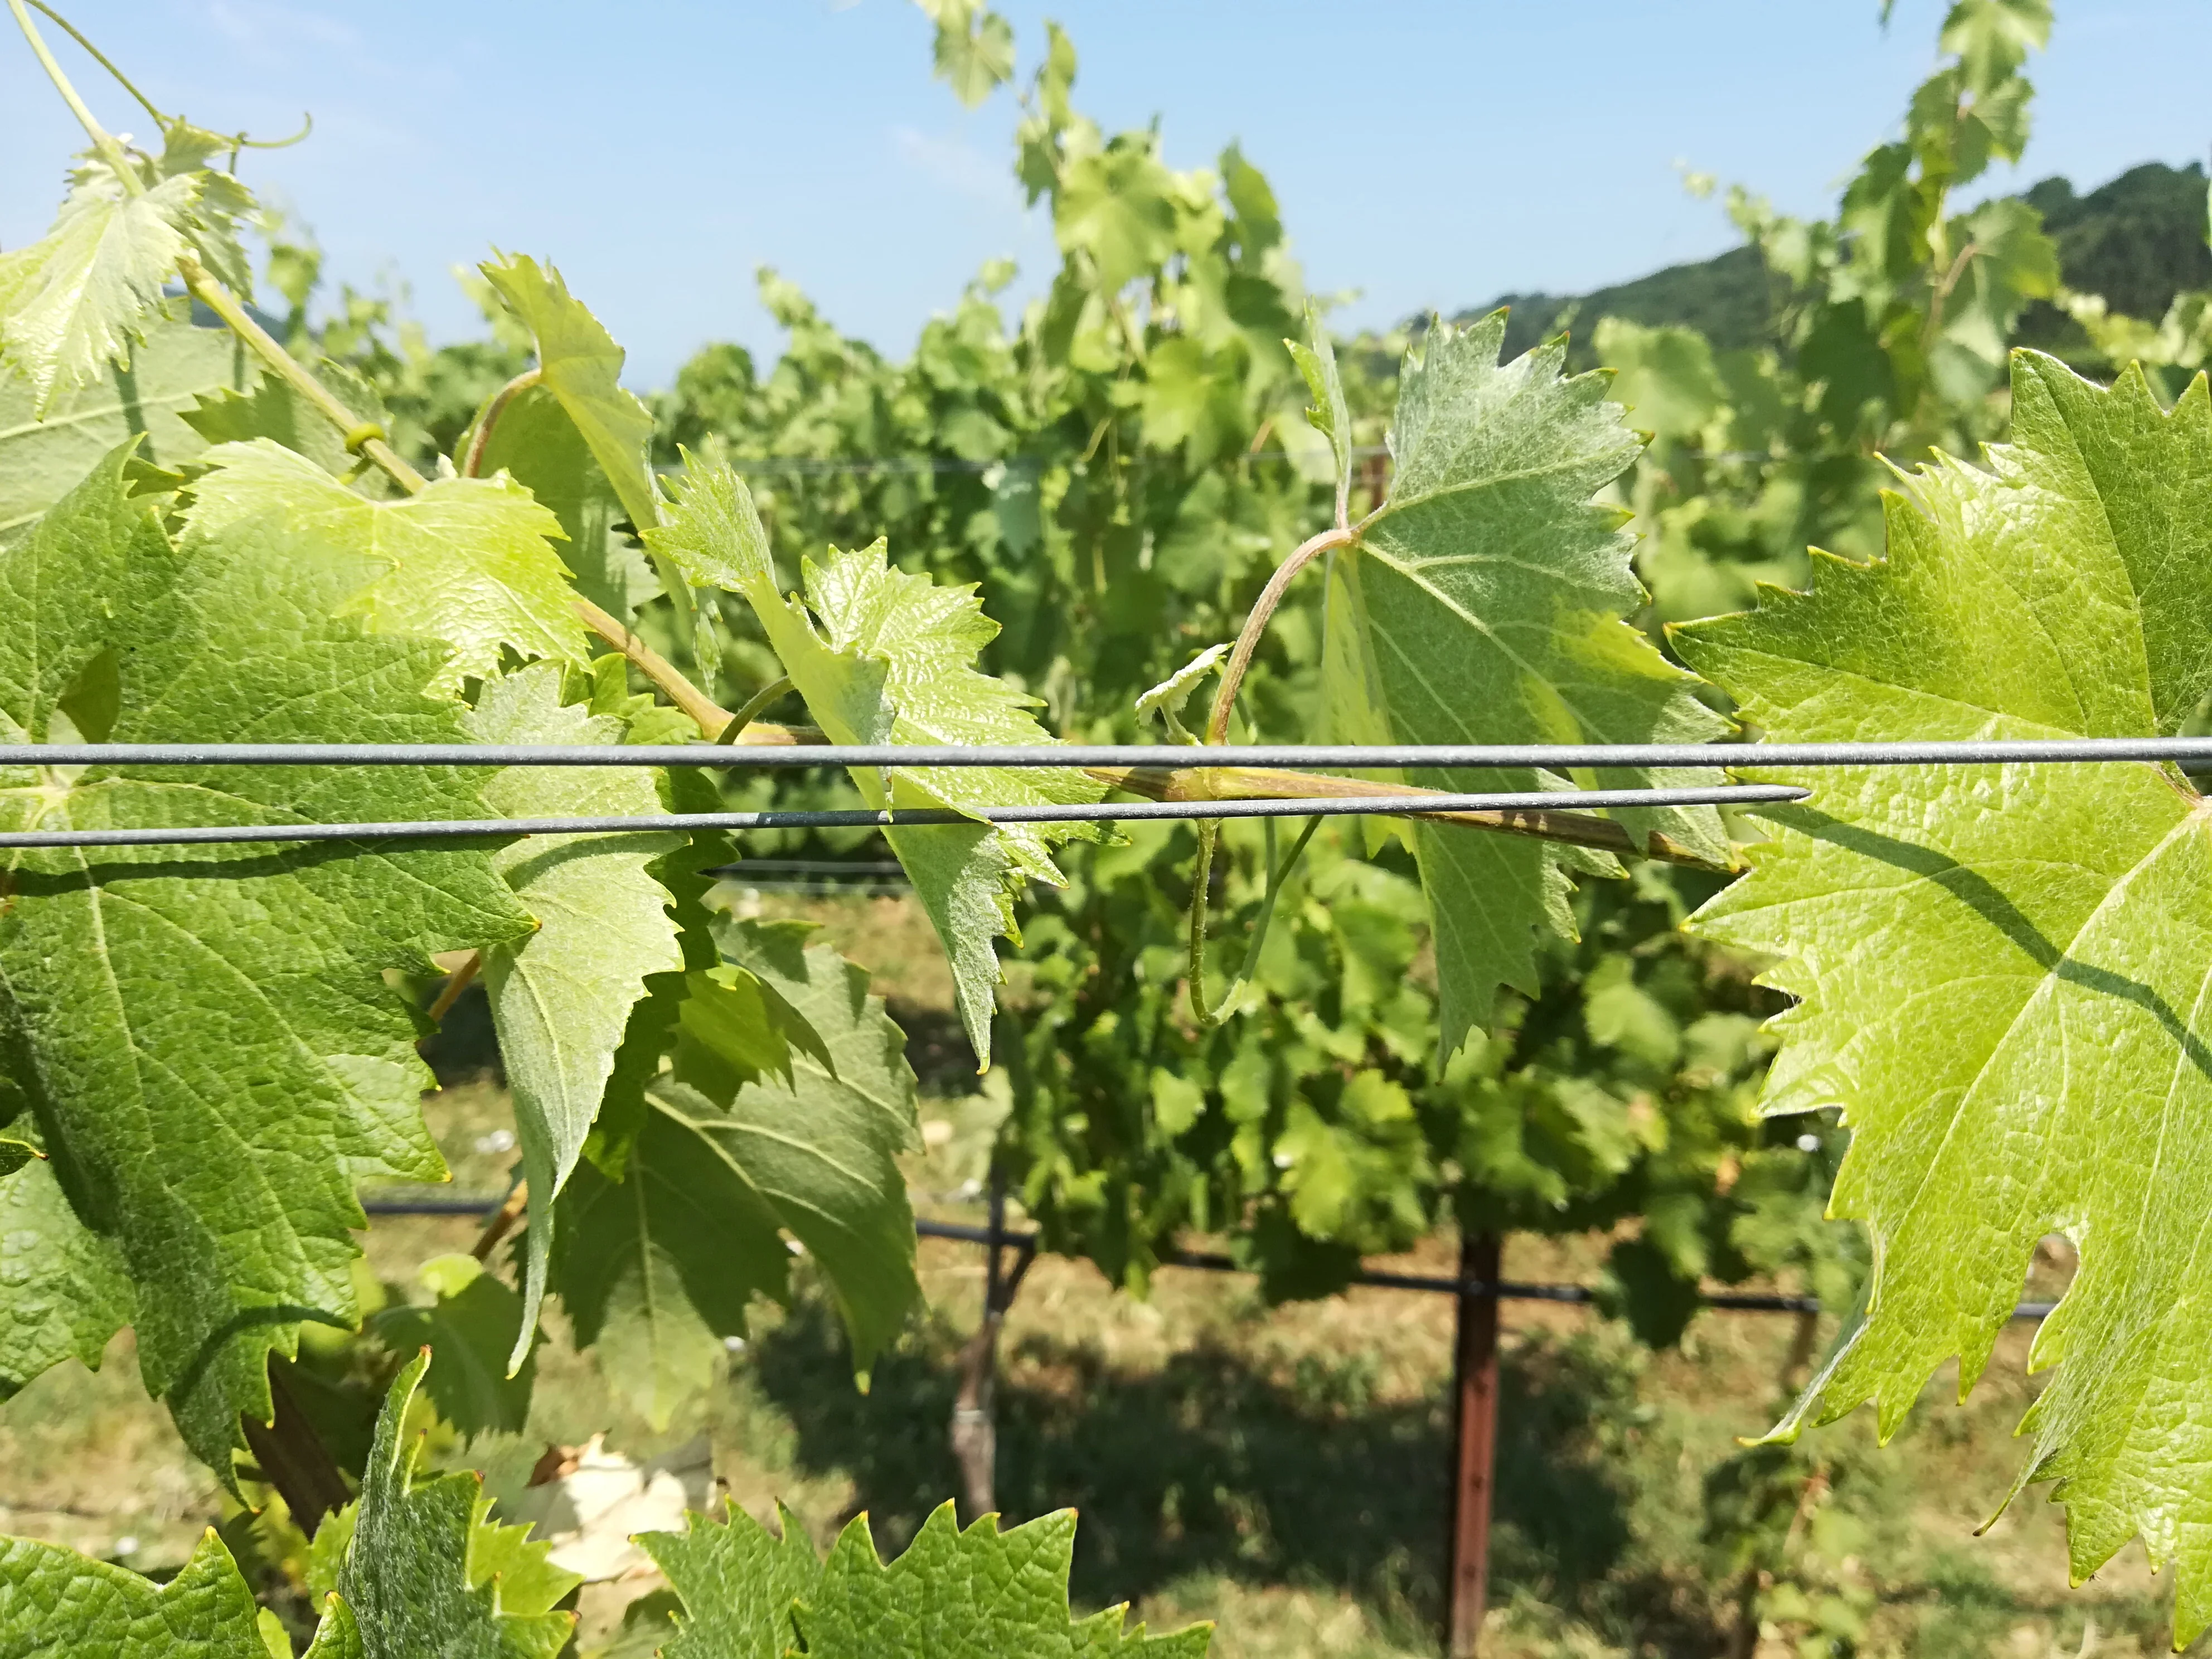 Top quality Italian zinc-aluminium steel wire diam. 3.15 mm for vineyards plants